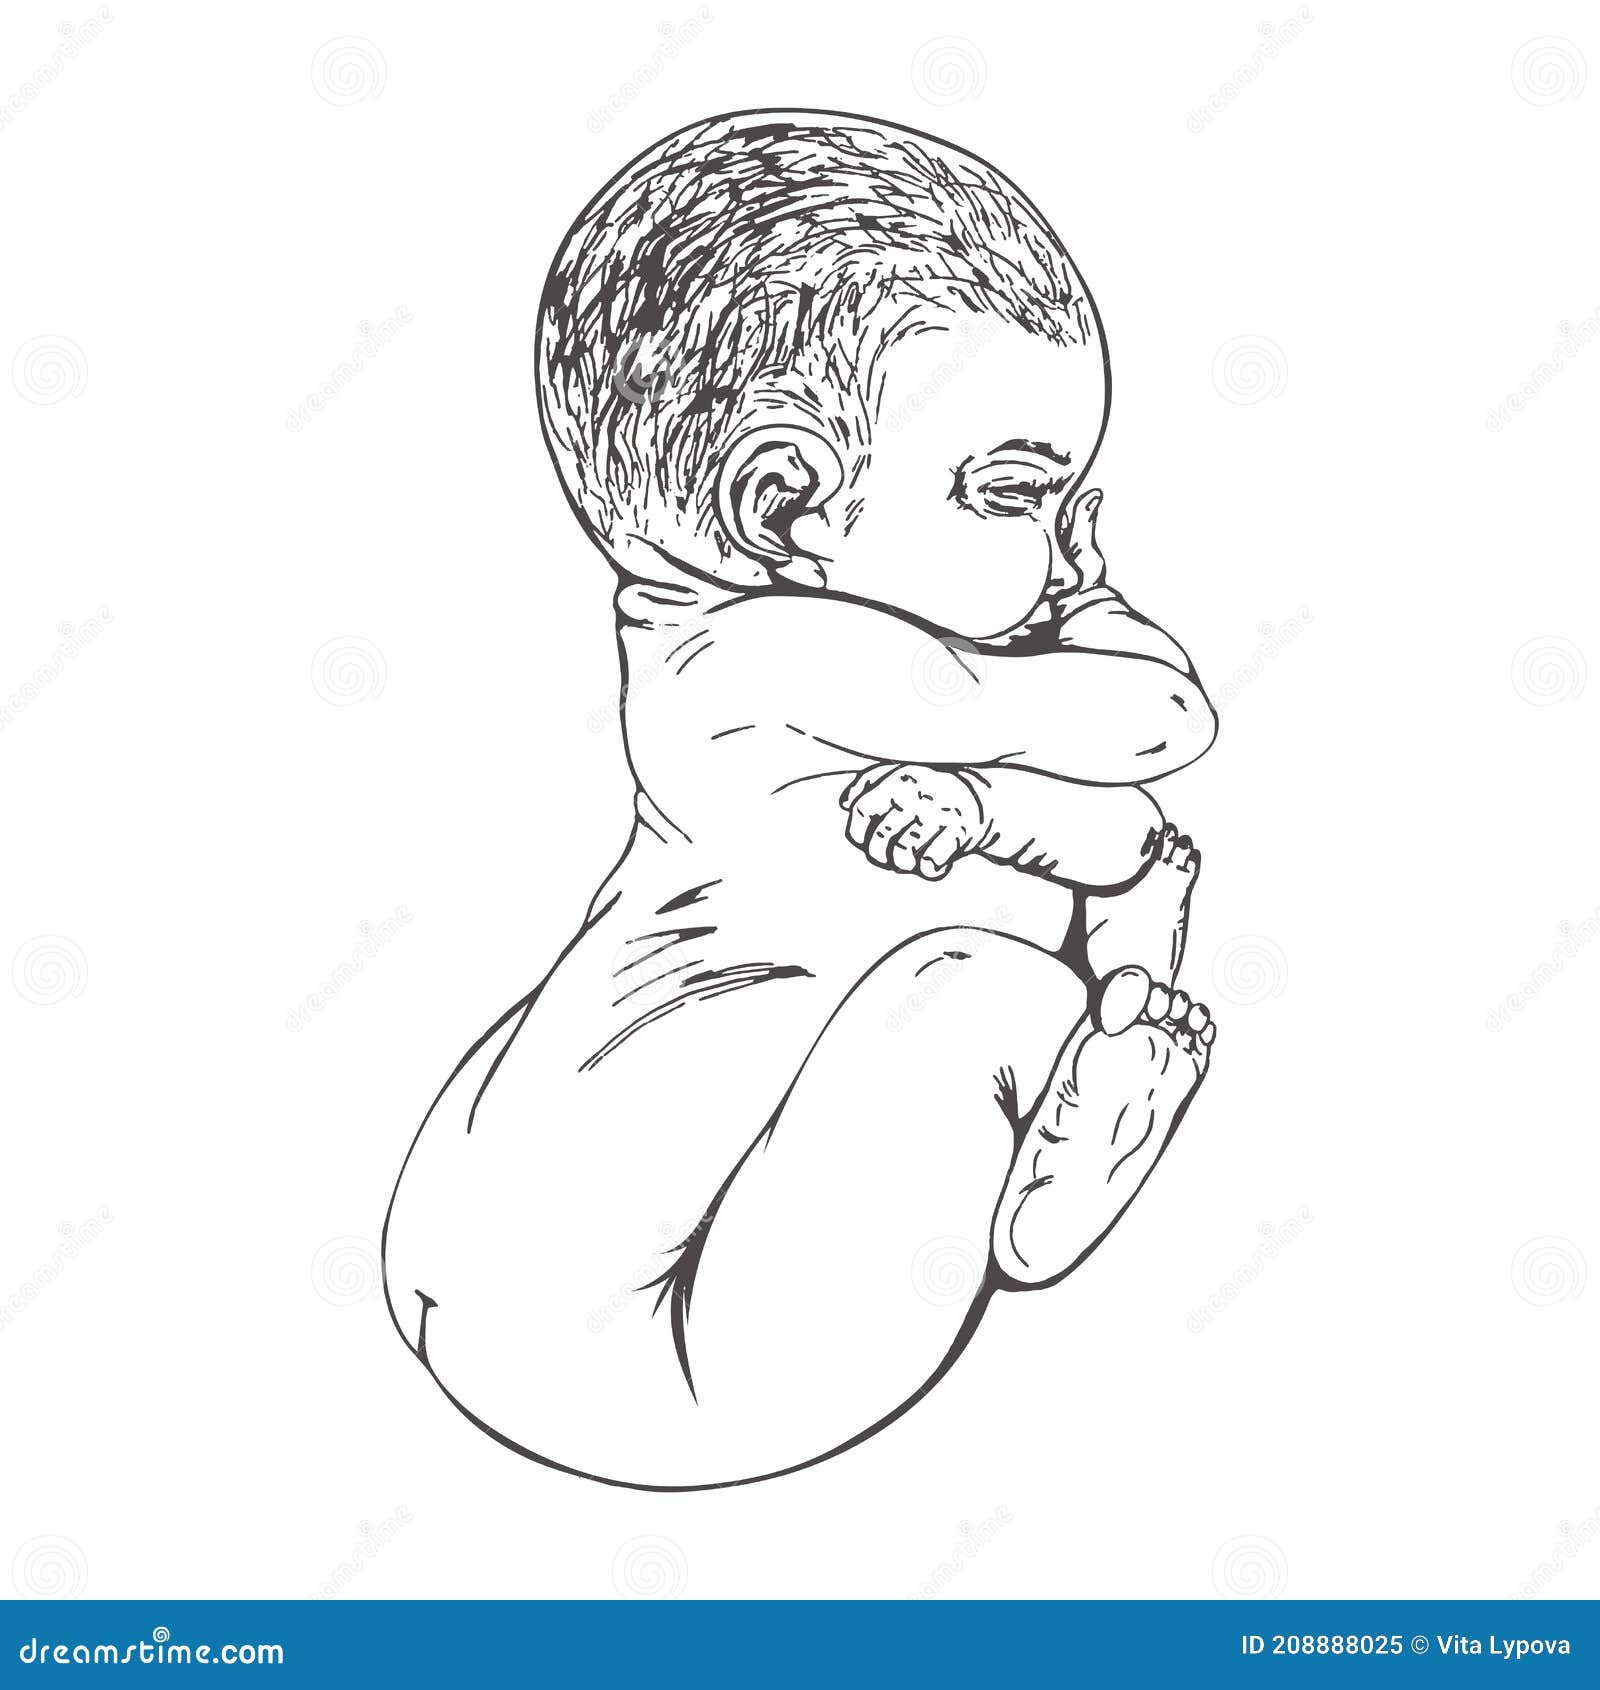 Newborn Baby Drawing Image - Drawing Skill